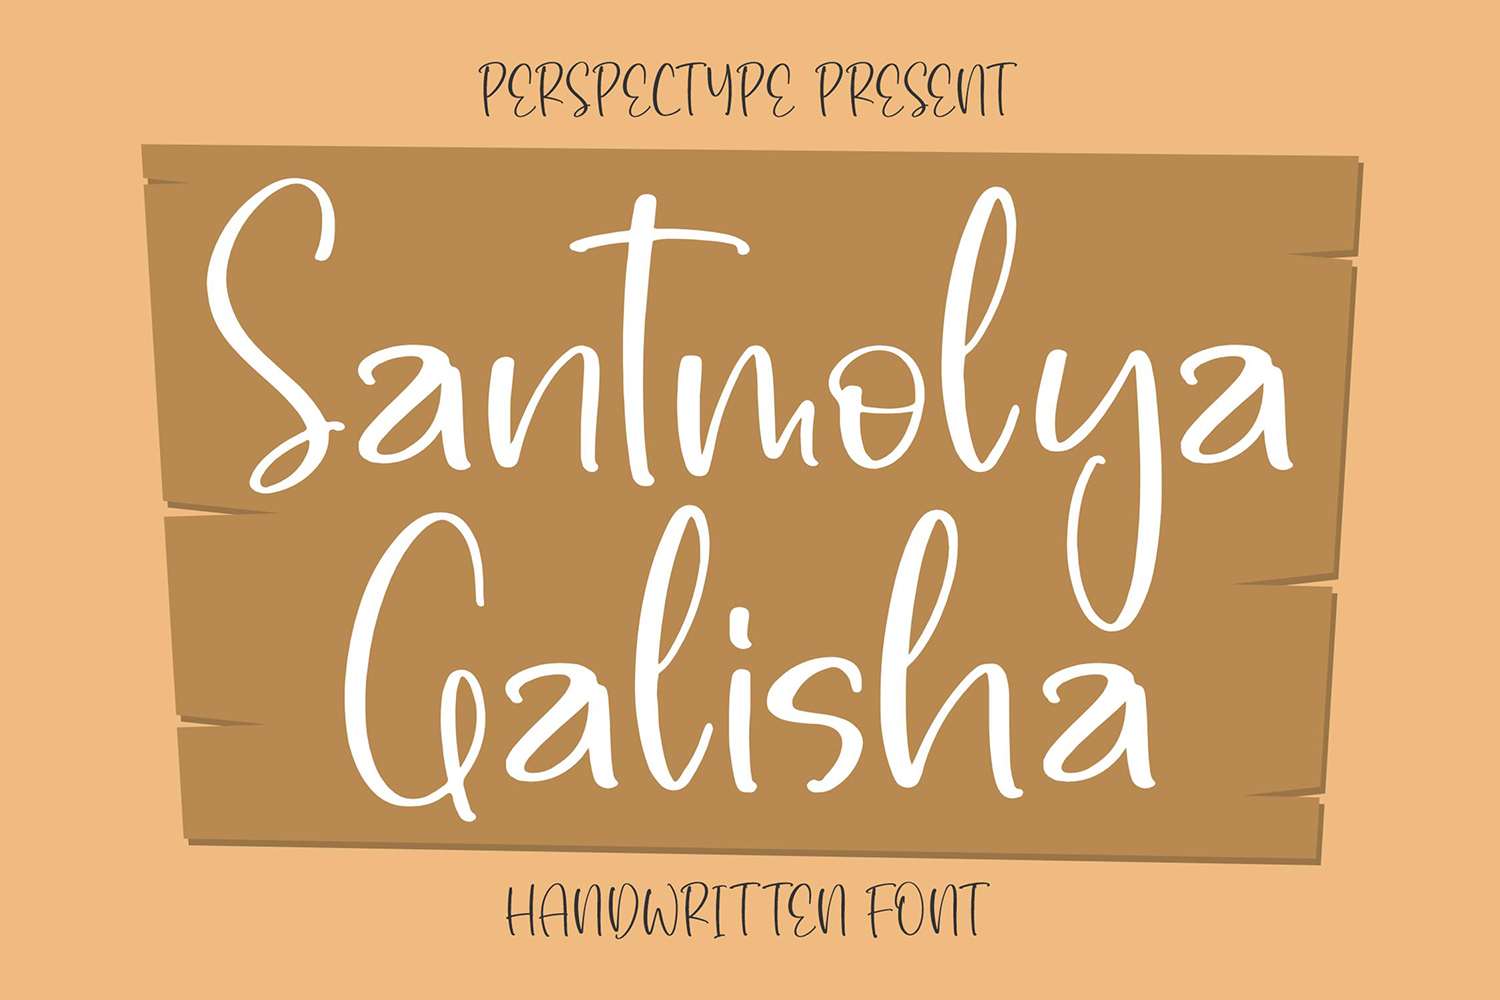 Santmolya Galisha Free Font